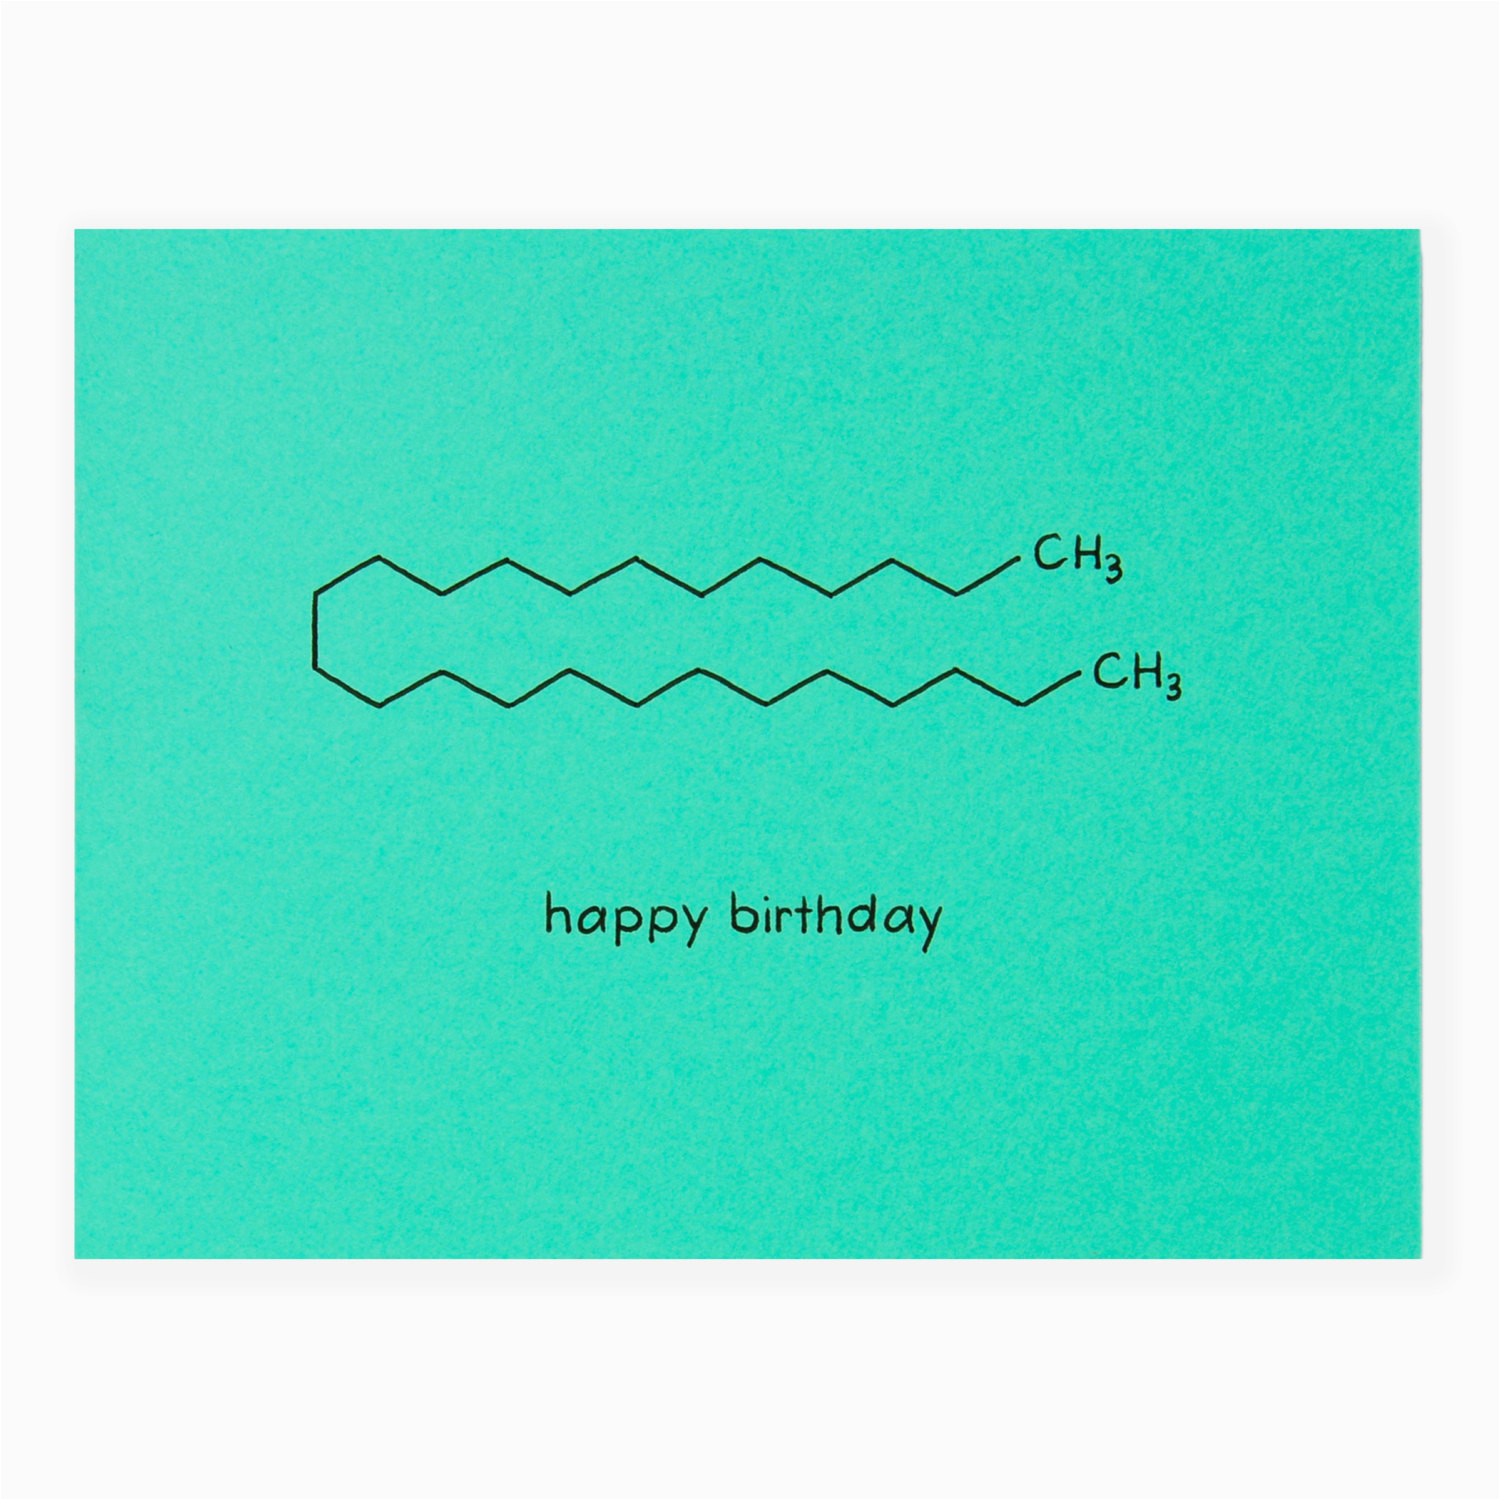 chemistry nerd birthday card happy